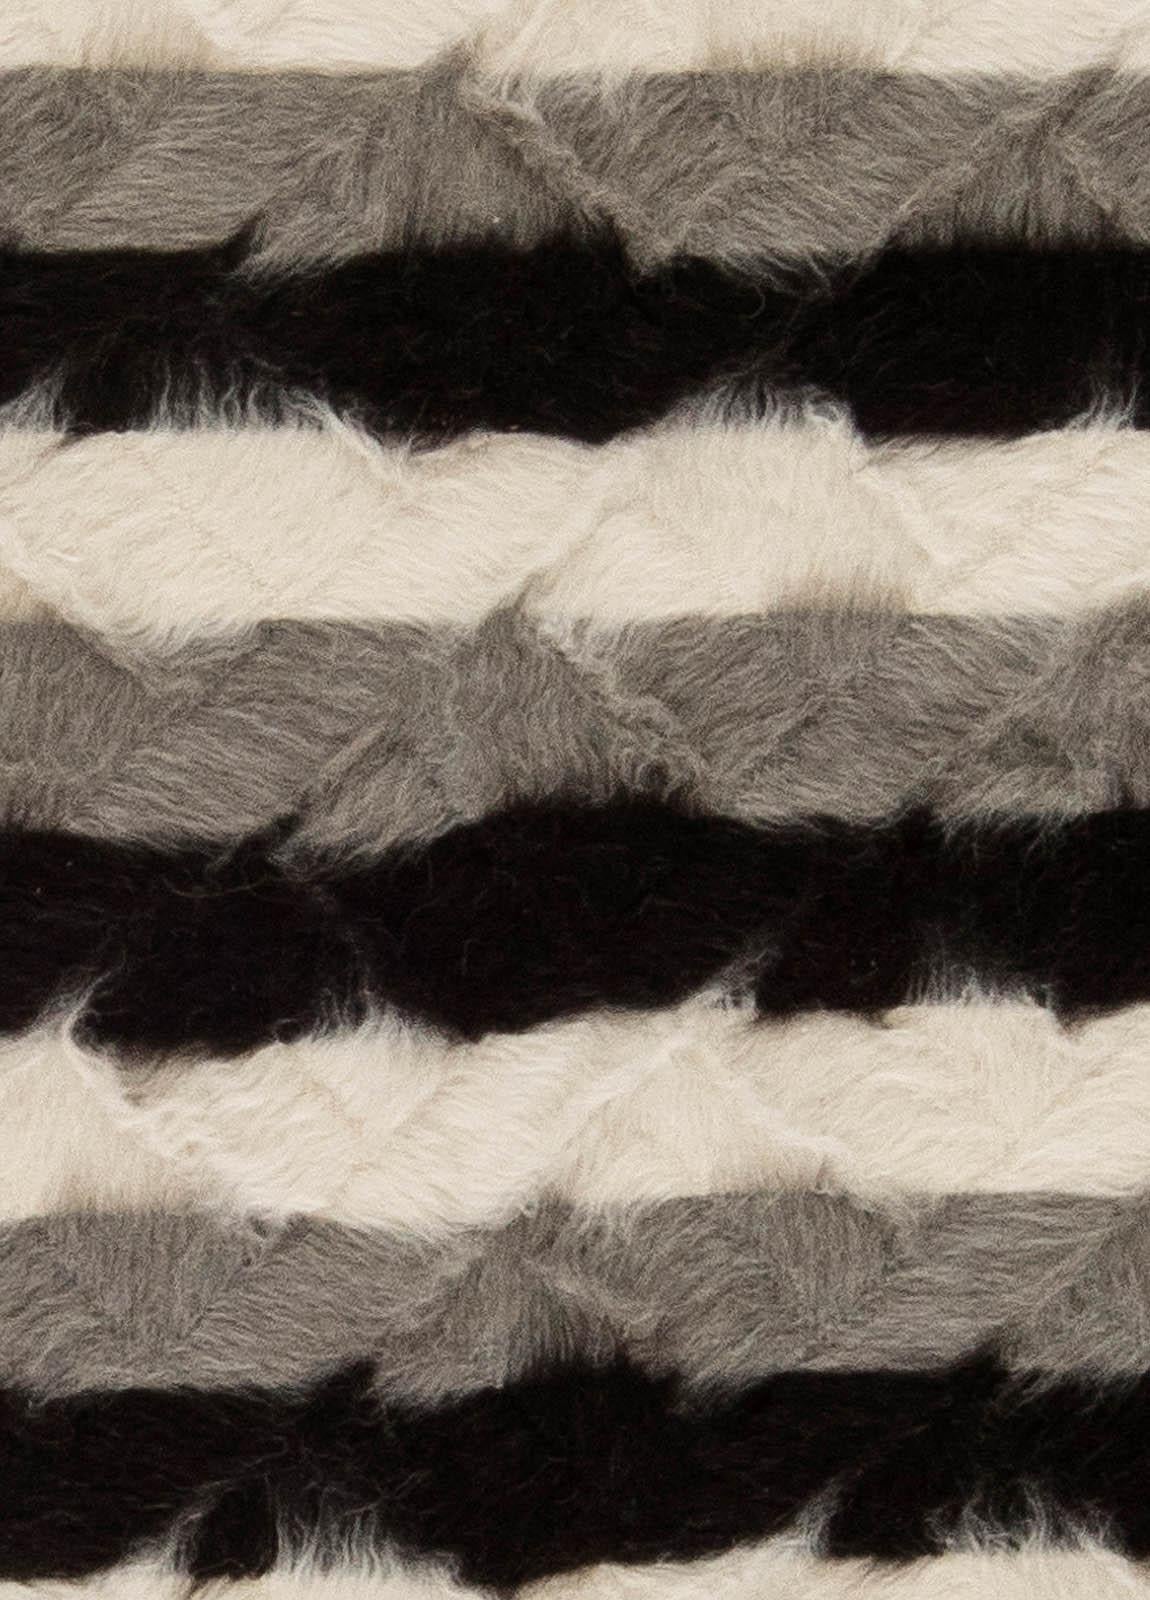 Taurus collection striped goat hair rug by Doris Leslie Blau.
Size: 4'0